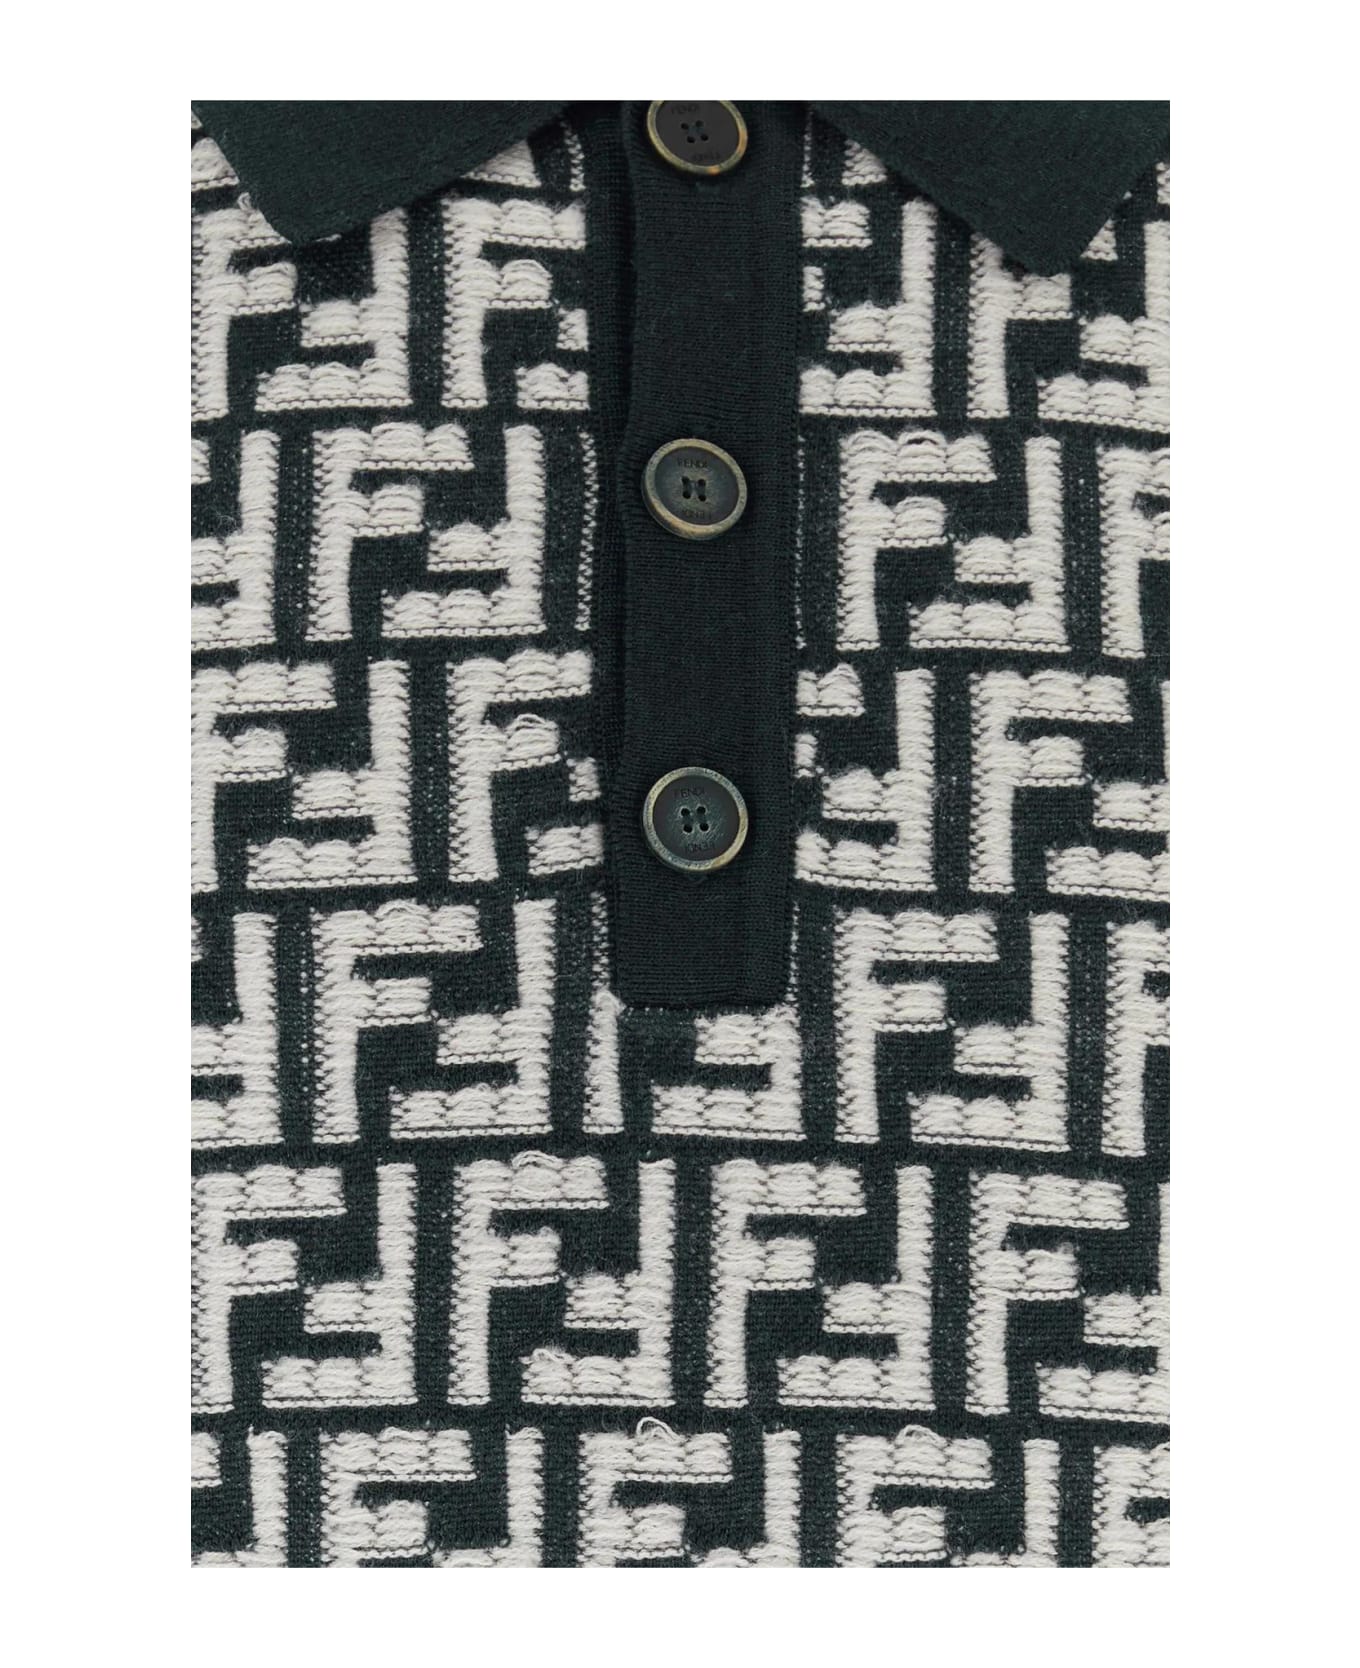 Fendi Embroidered Wool Polo Shirt - Nero